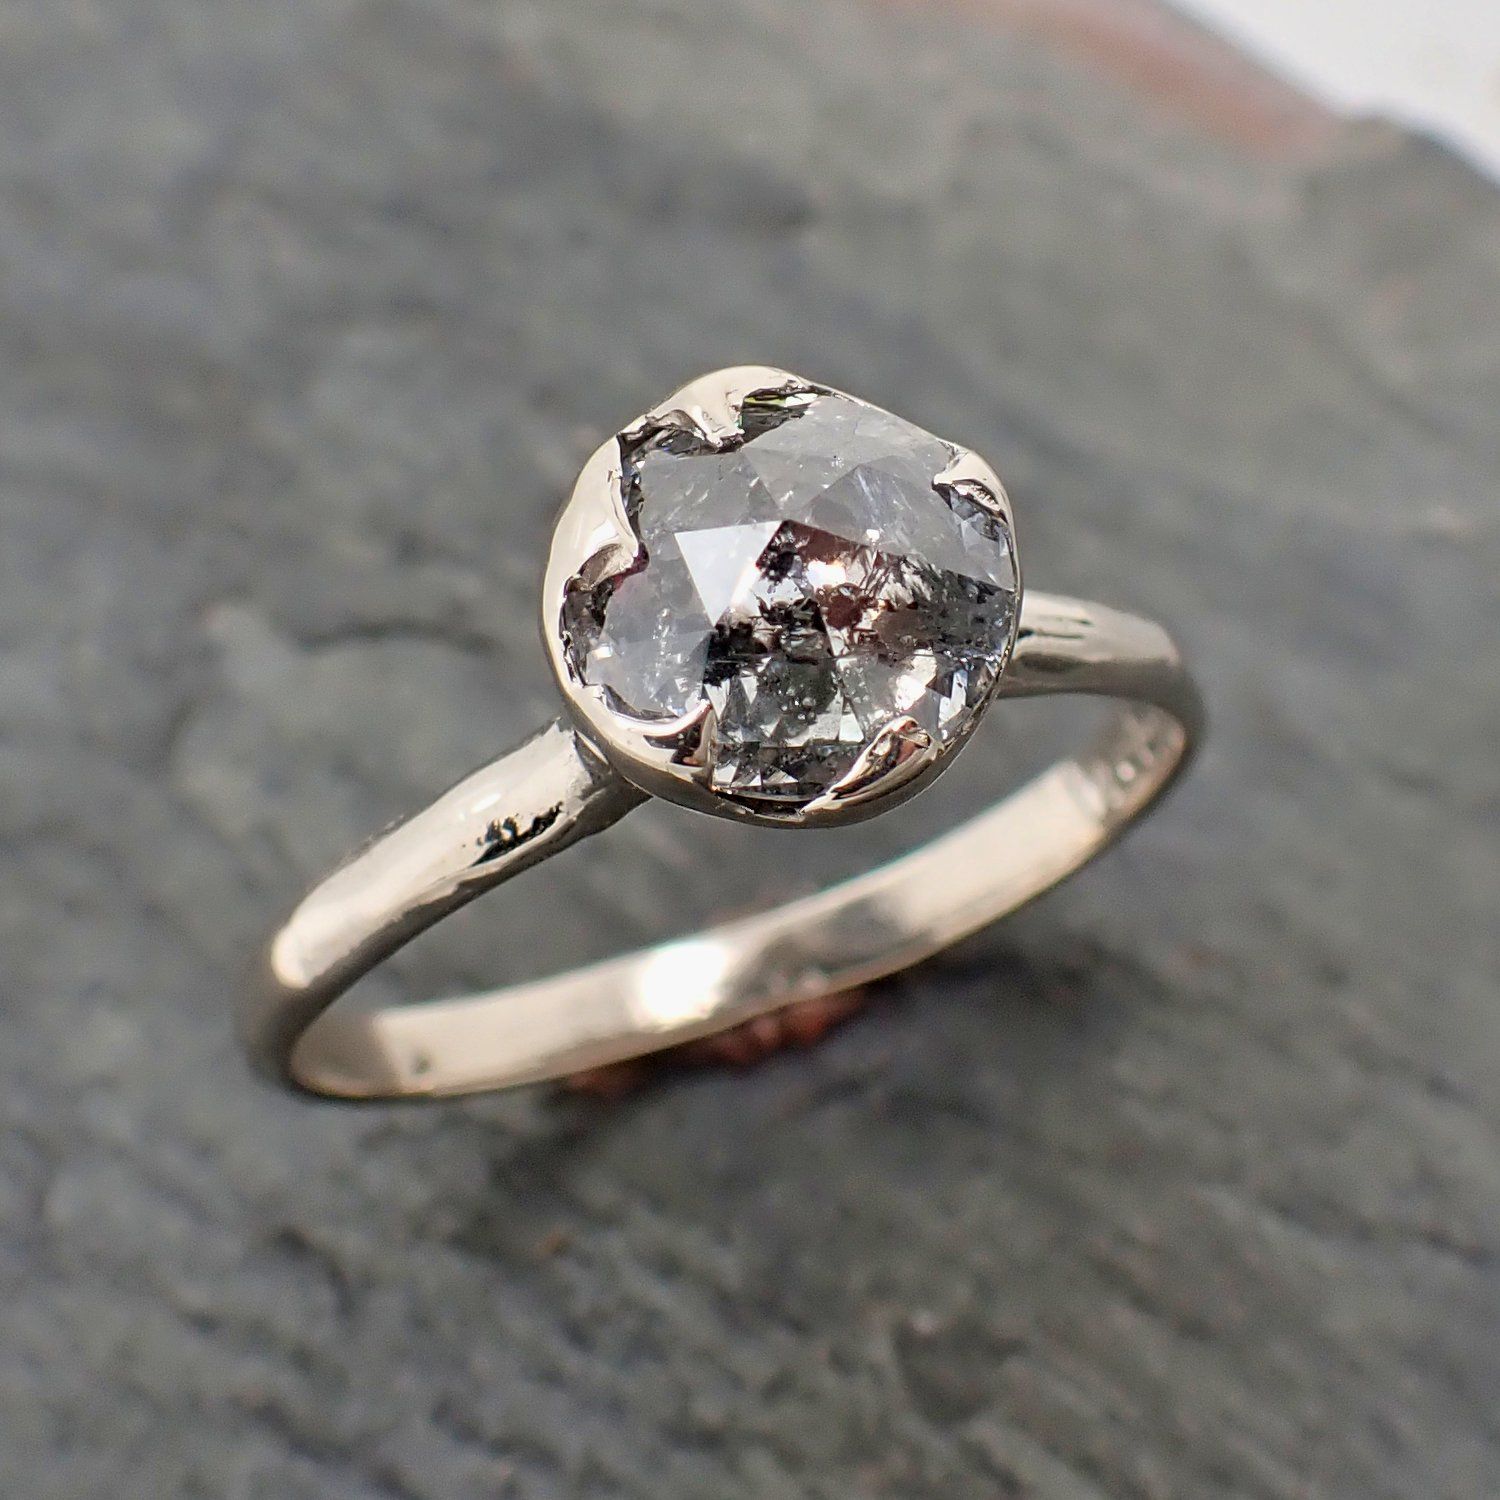 fancy cut salt and pepper diamond solitaire engagement 14k white gold wedding ring byangeline 2294 Alternative Engagement